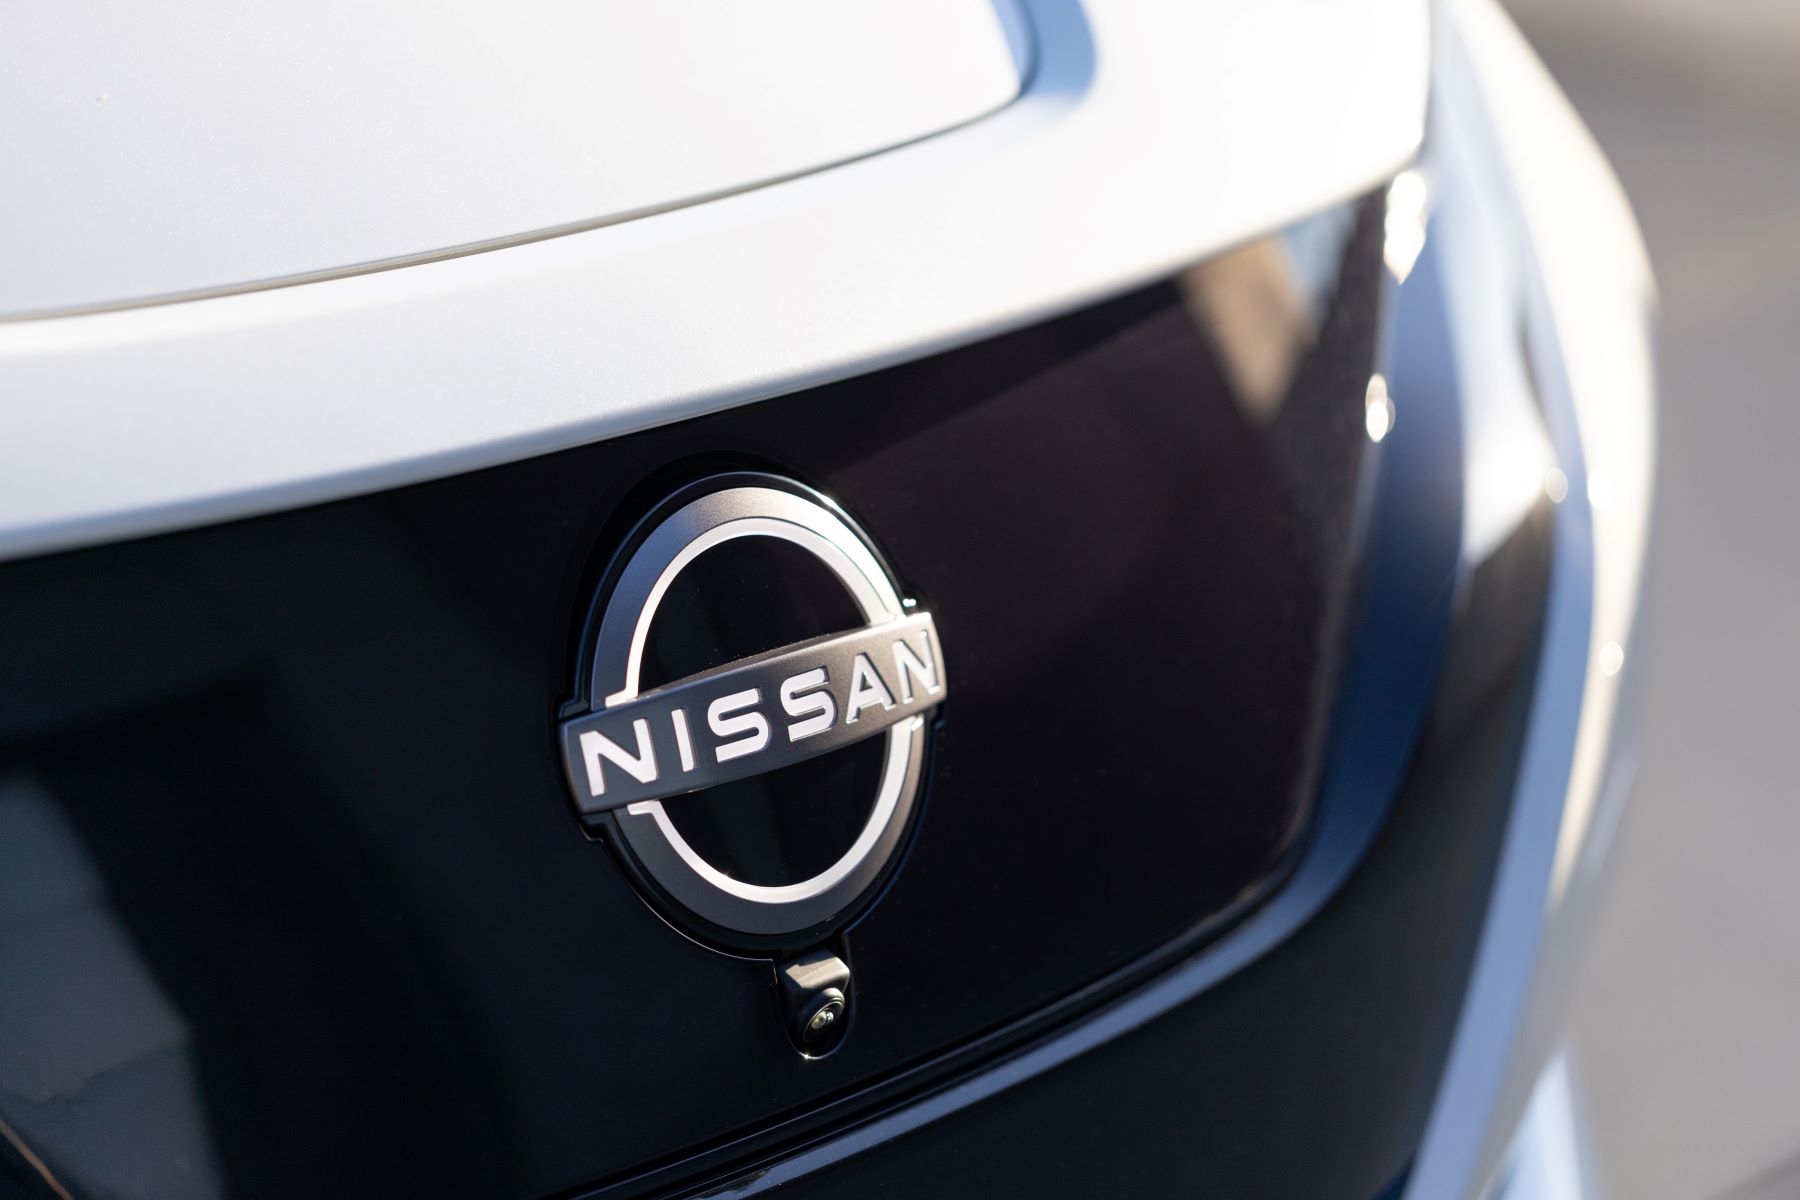 An illuminated Nissan logo on the 2023 Nissan Leaf all-electric hatchback model